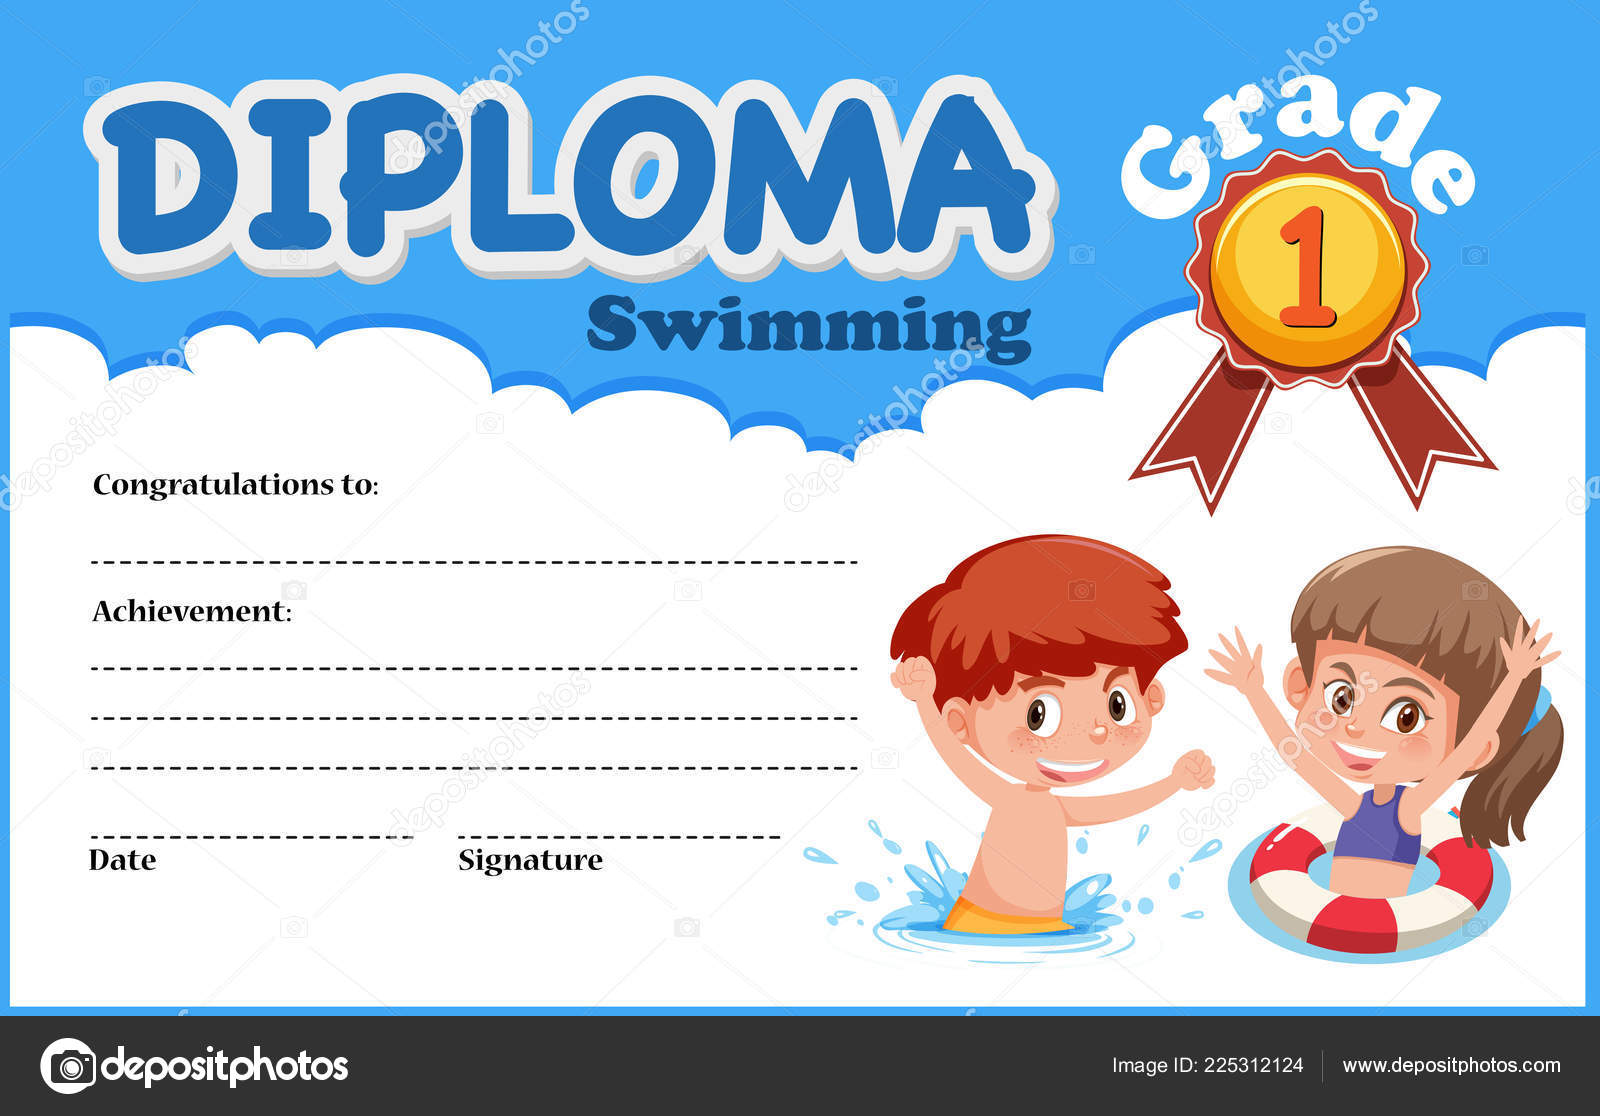 Swimming Diploma Certificate Template Illustration Stock Vector Inside Swimming Award Certificate Template